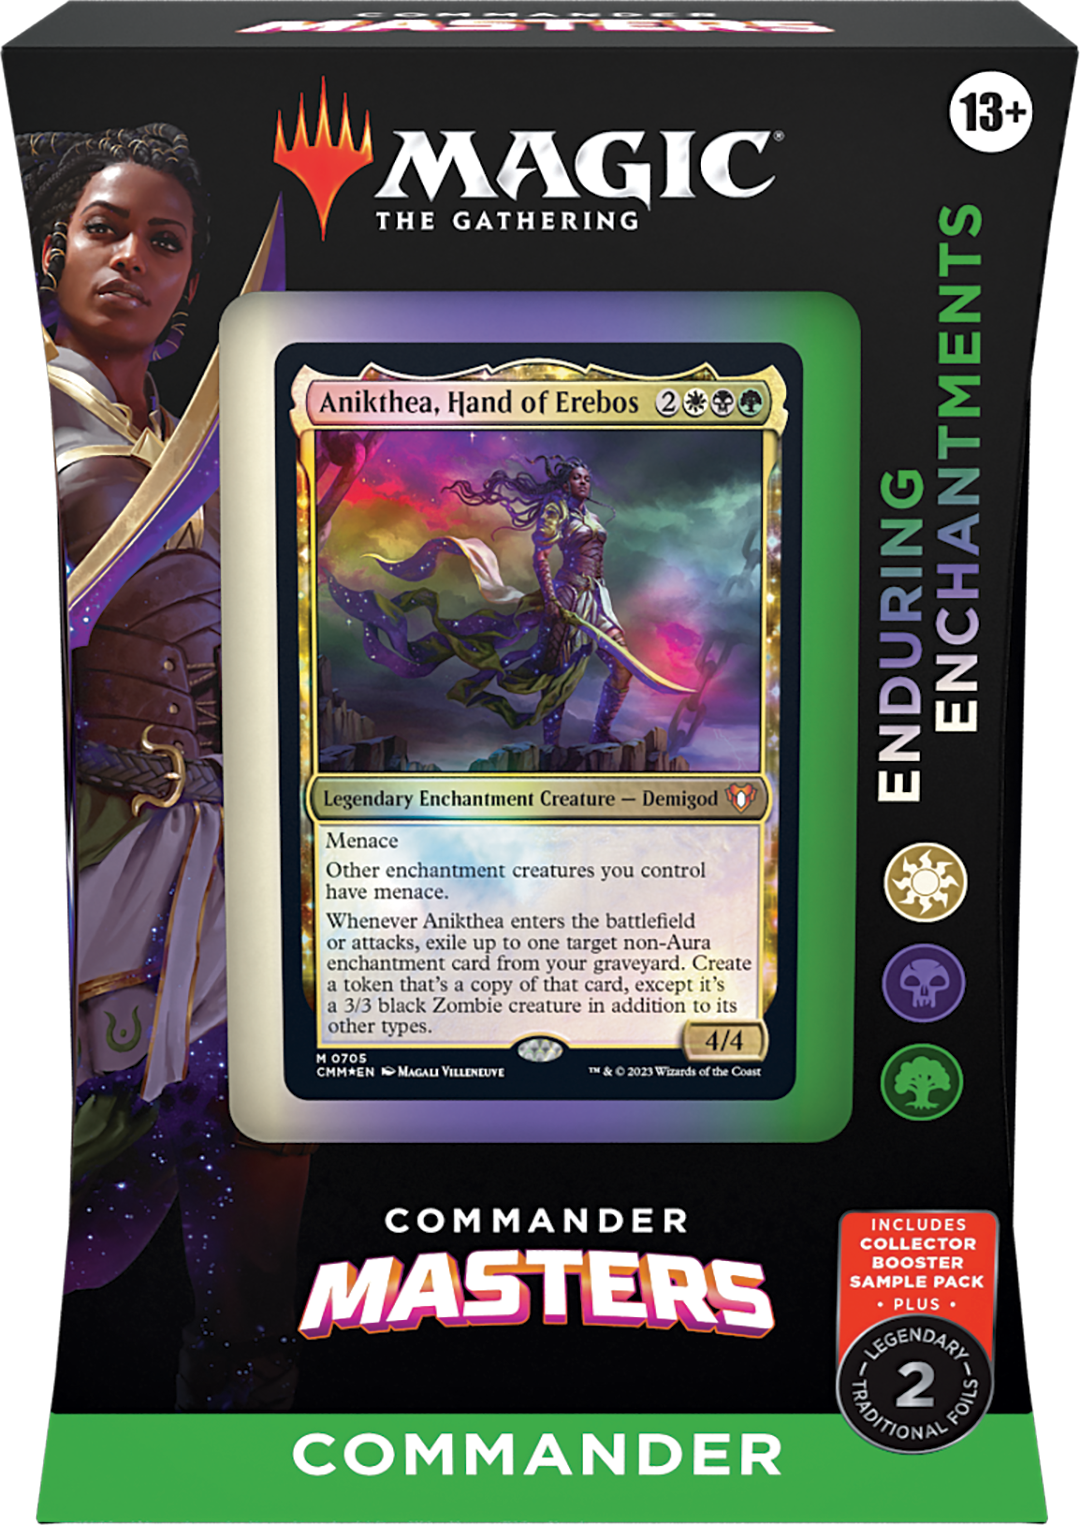 Commander Masters – Enduring Enchantments